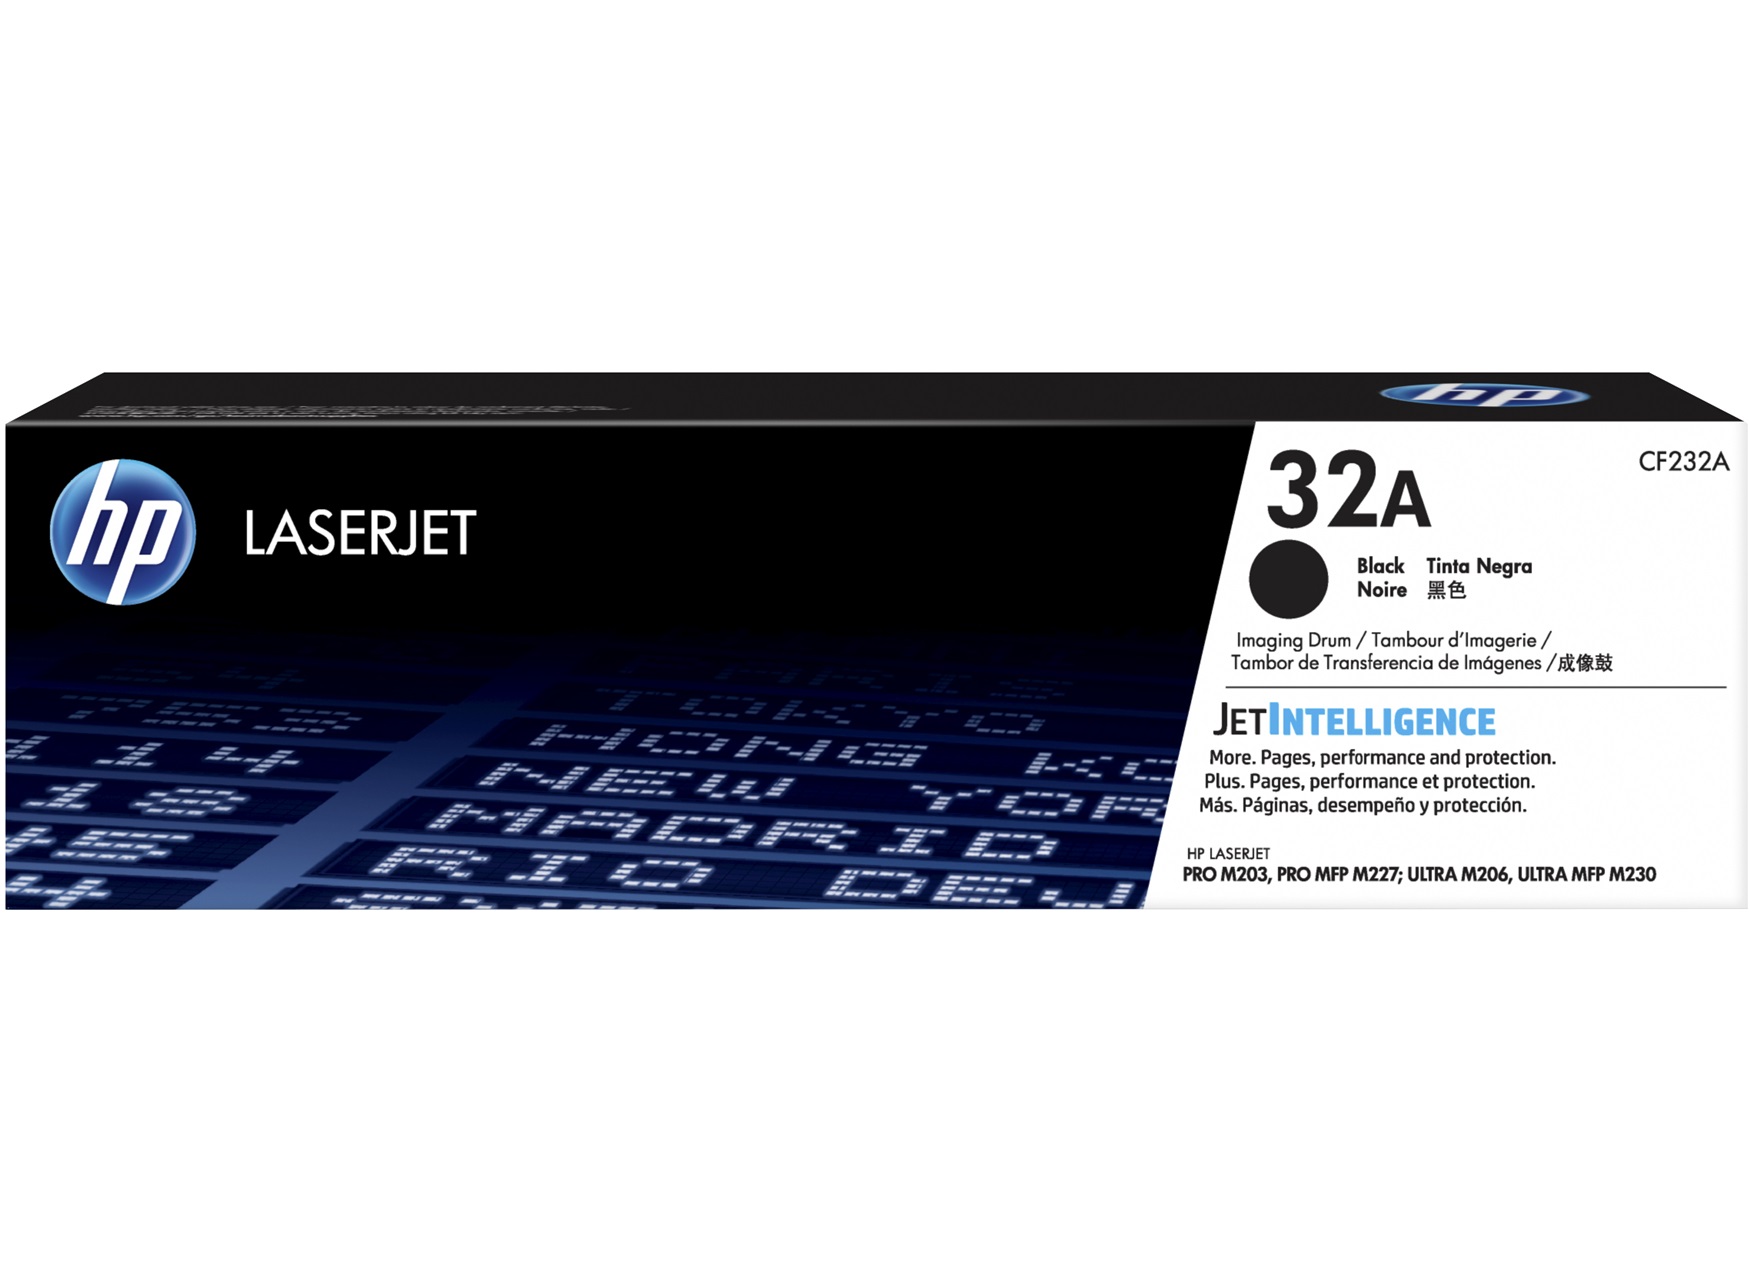 HP 32A Laserjet Imaging Drum CF232A